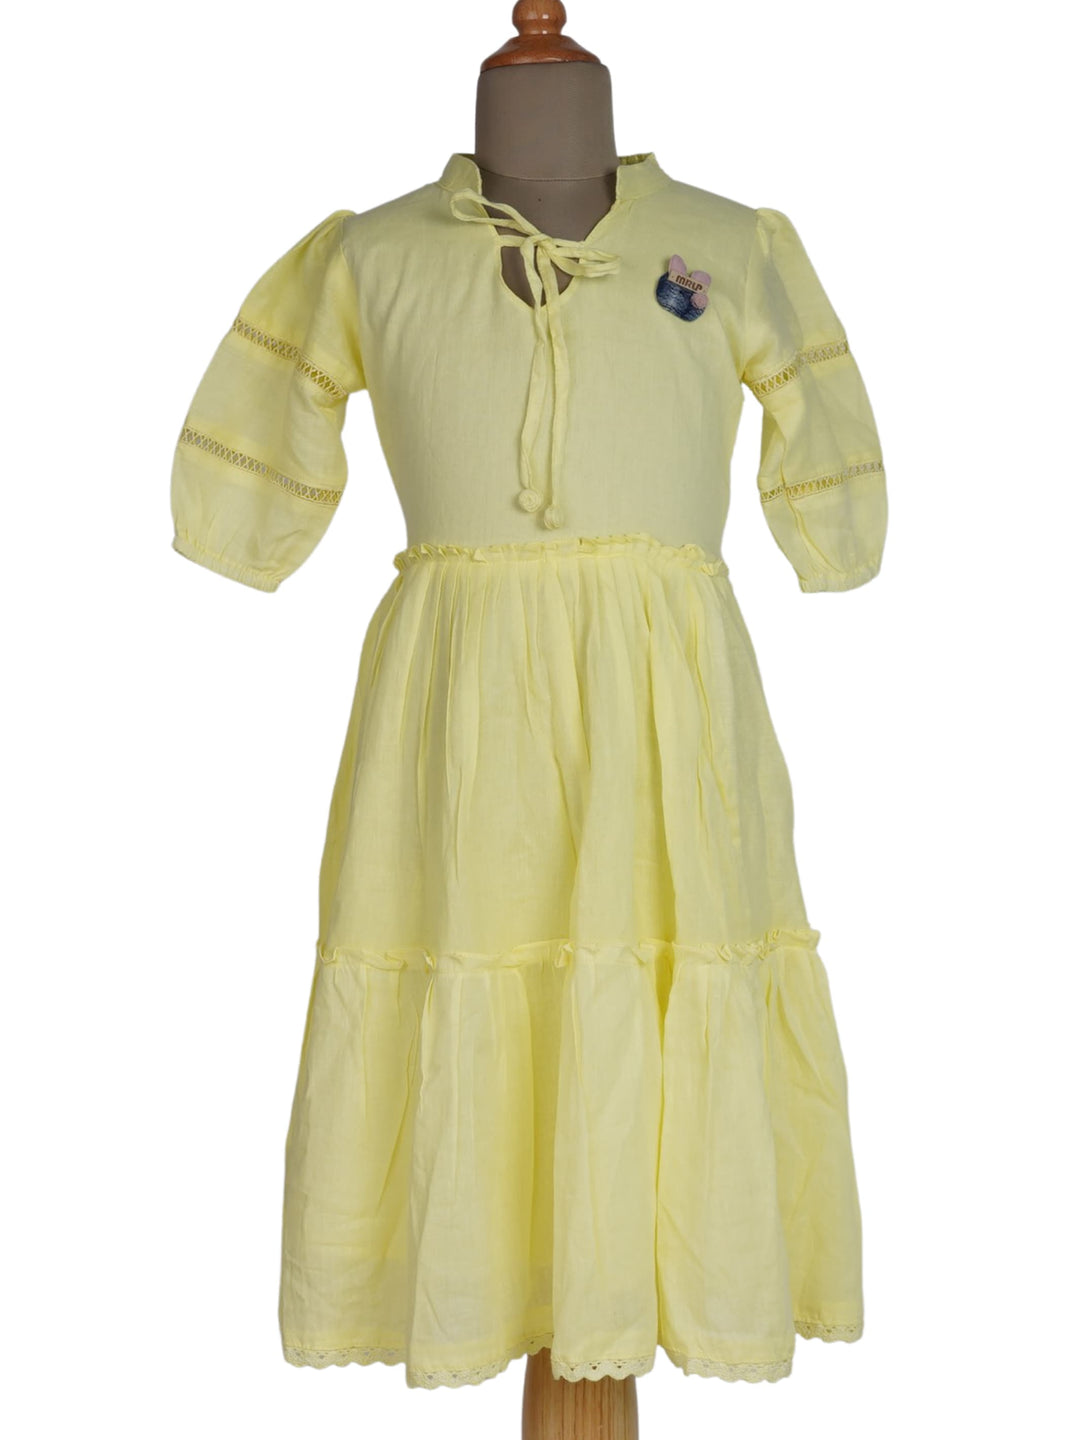 The Nesavu Frocks & Dresses Monochrome Cotton Wear For Girls With Tie-Up Mandarin Collar psr silks Nesavu 24 (5Y-6Y) / Yellow GFC594B